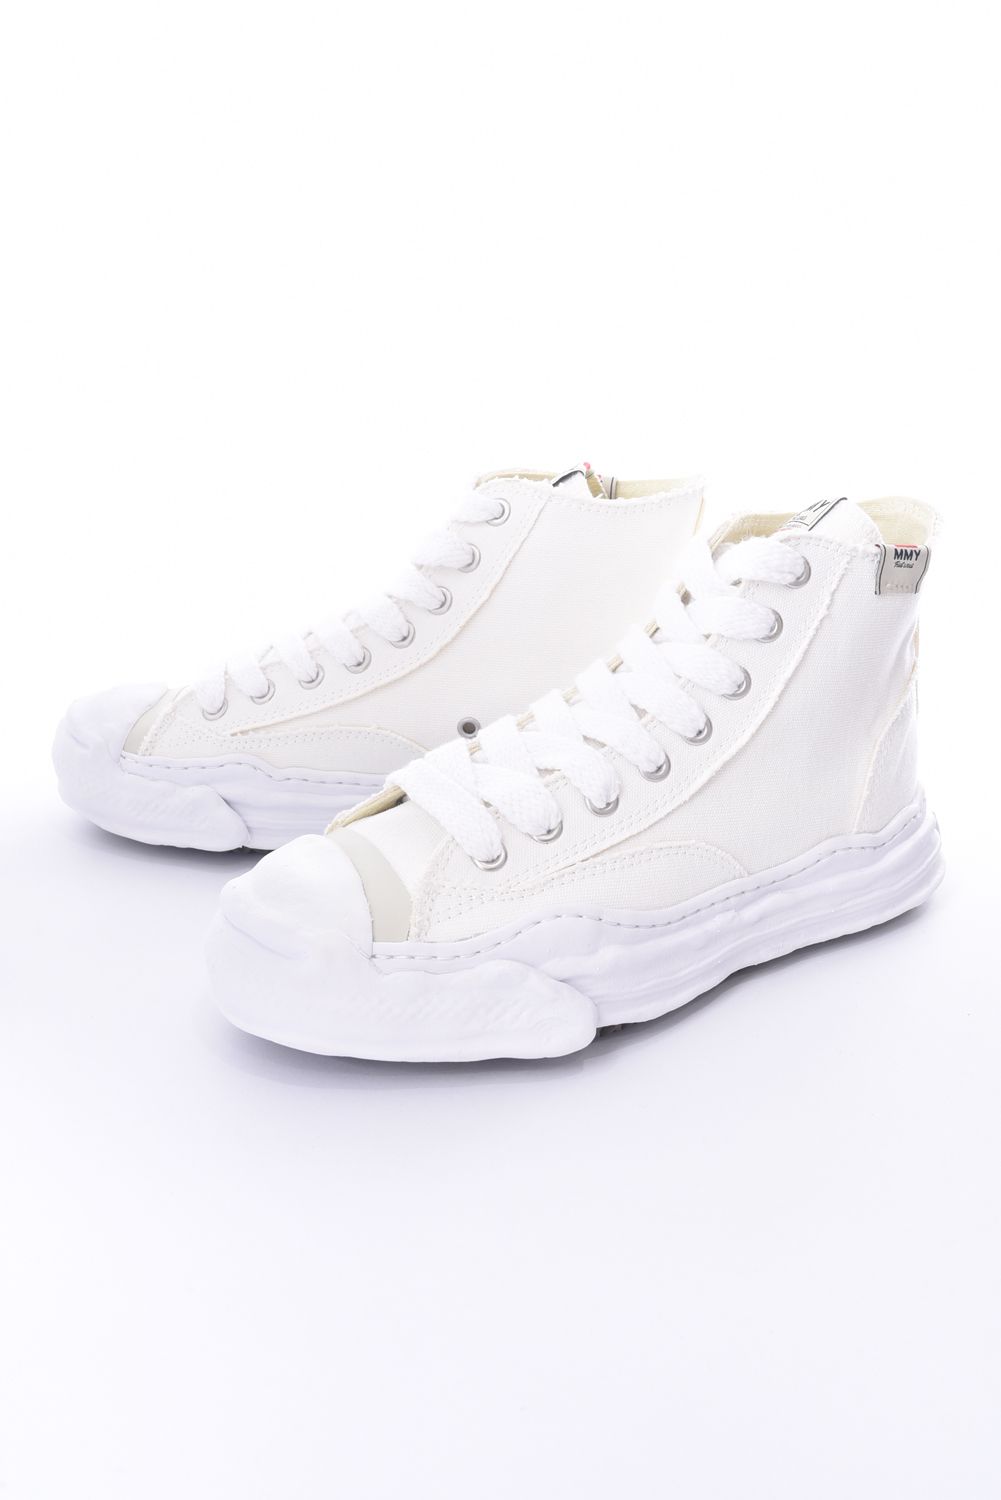 Maison MIHARA YASUHIRO - OG Sole Canvas High-top Sneaker / オリジナルソール キャンバス ハイカット  ホワイト | gossip